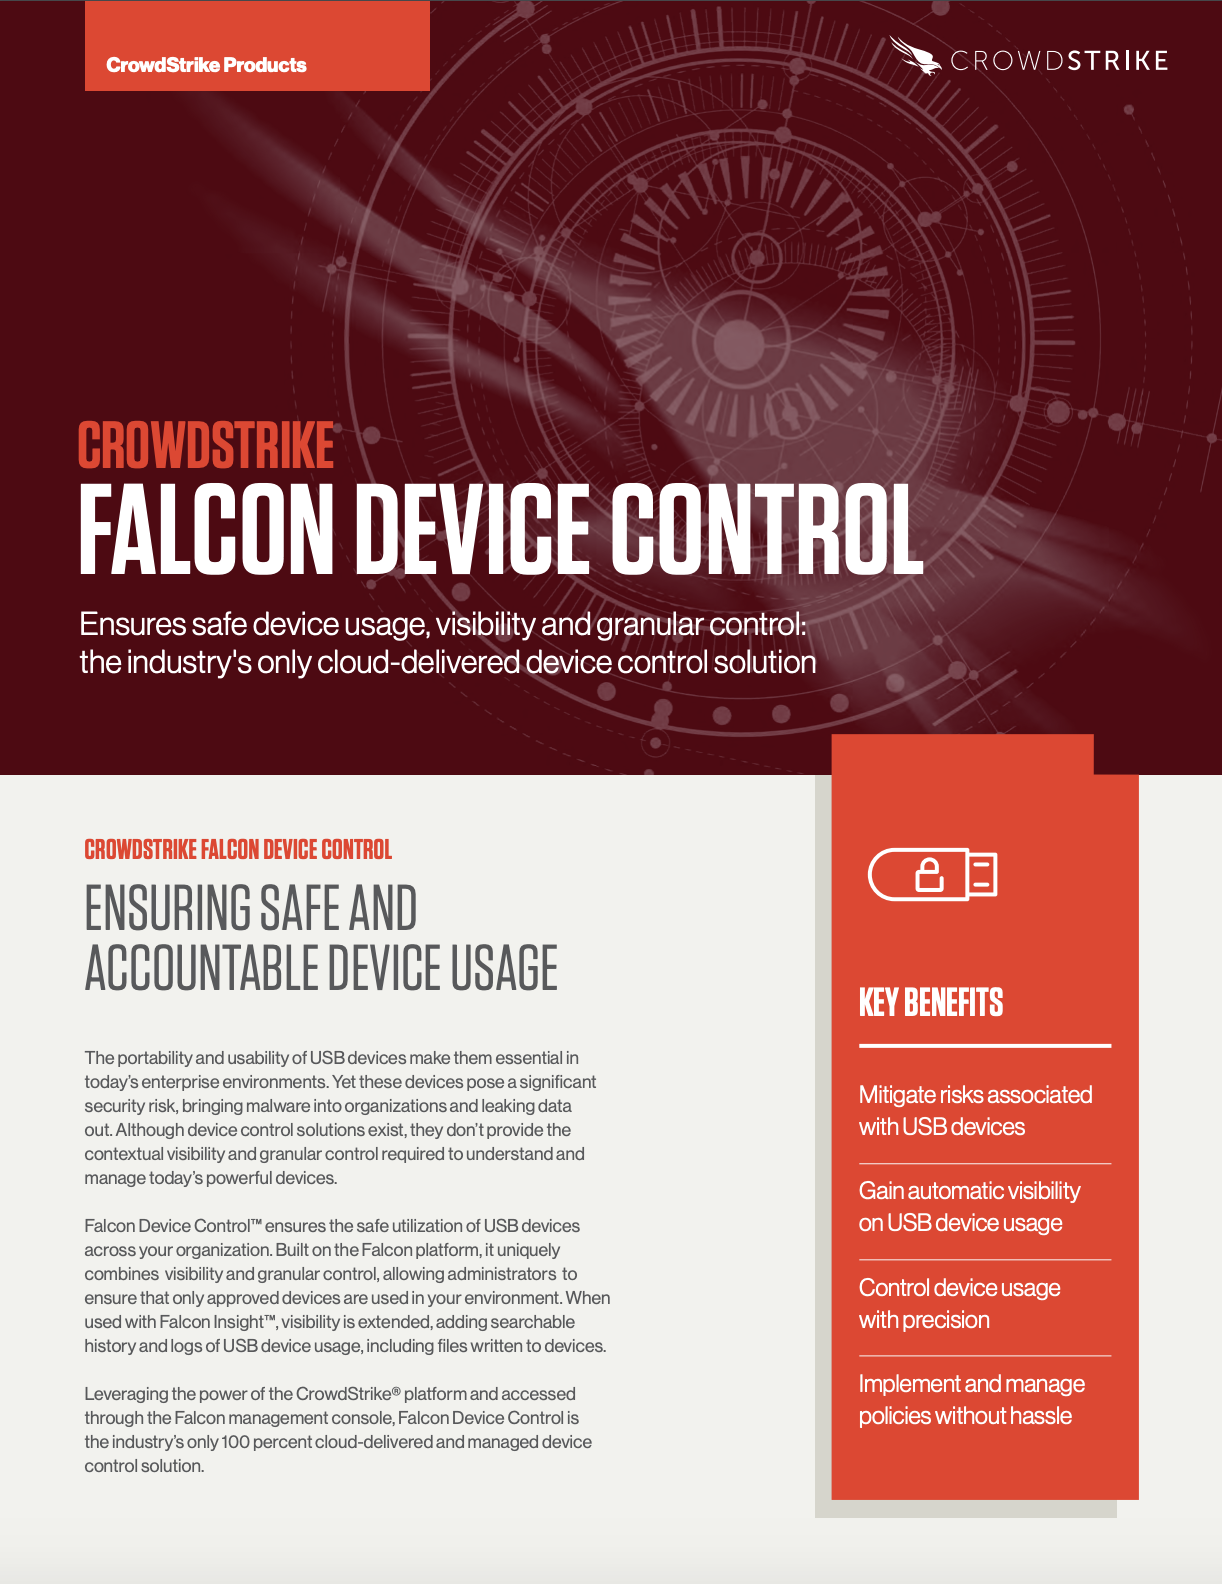 crowdstrike falcon device control